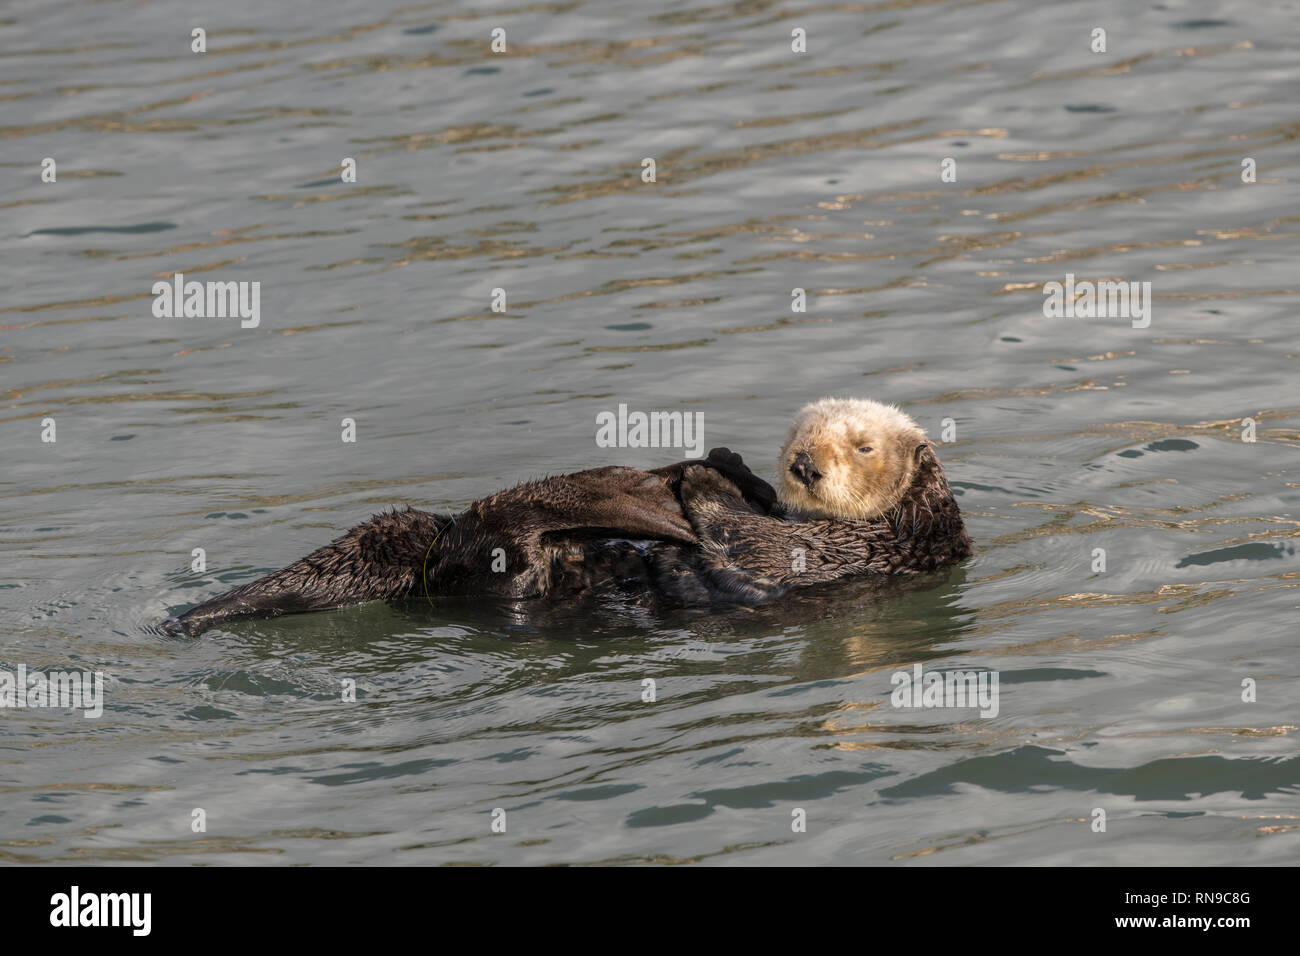 California sea otter Stock Photo